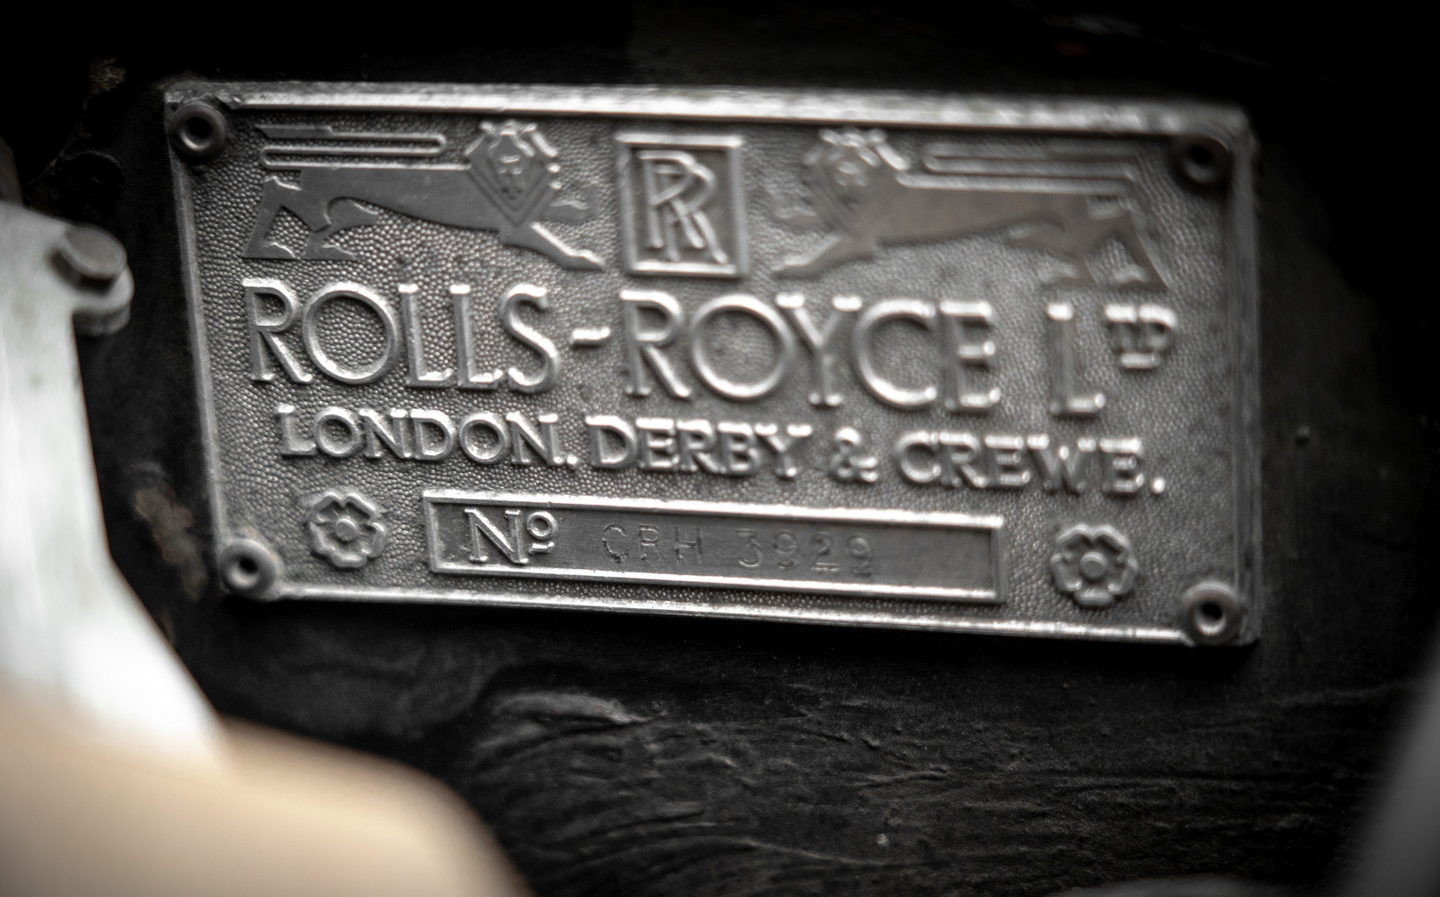 Michael Caine Rolls Royce Drophead coupe